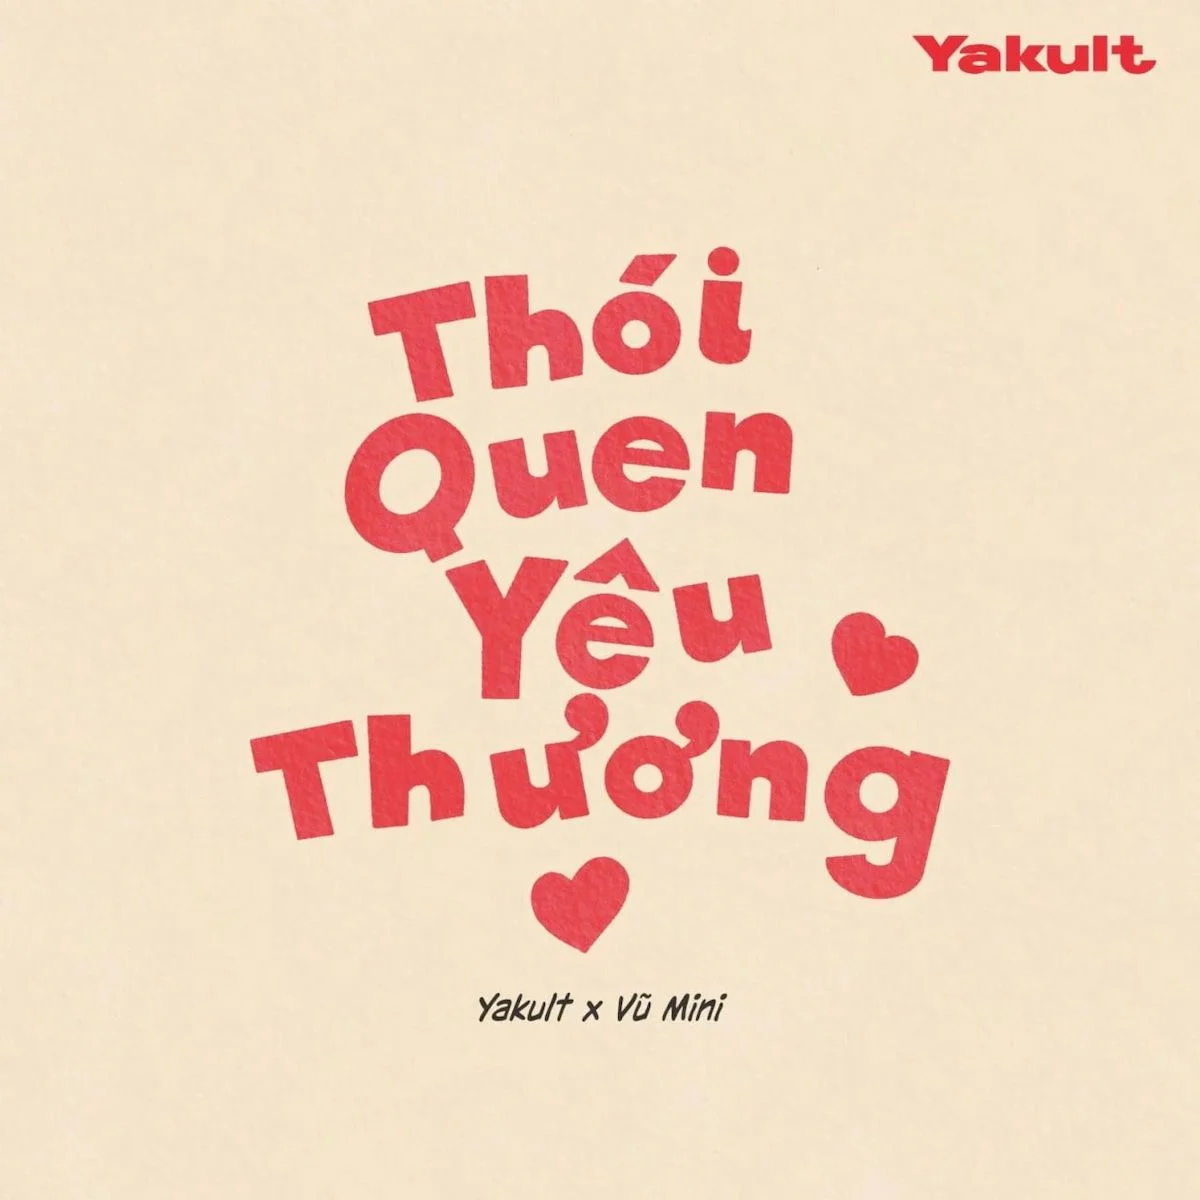 Thoi-quen-yeu-thuong